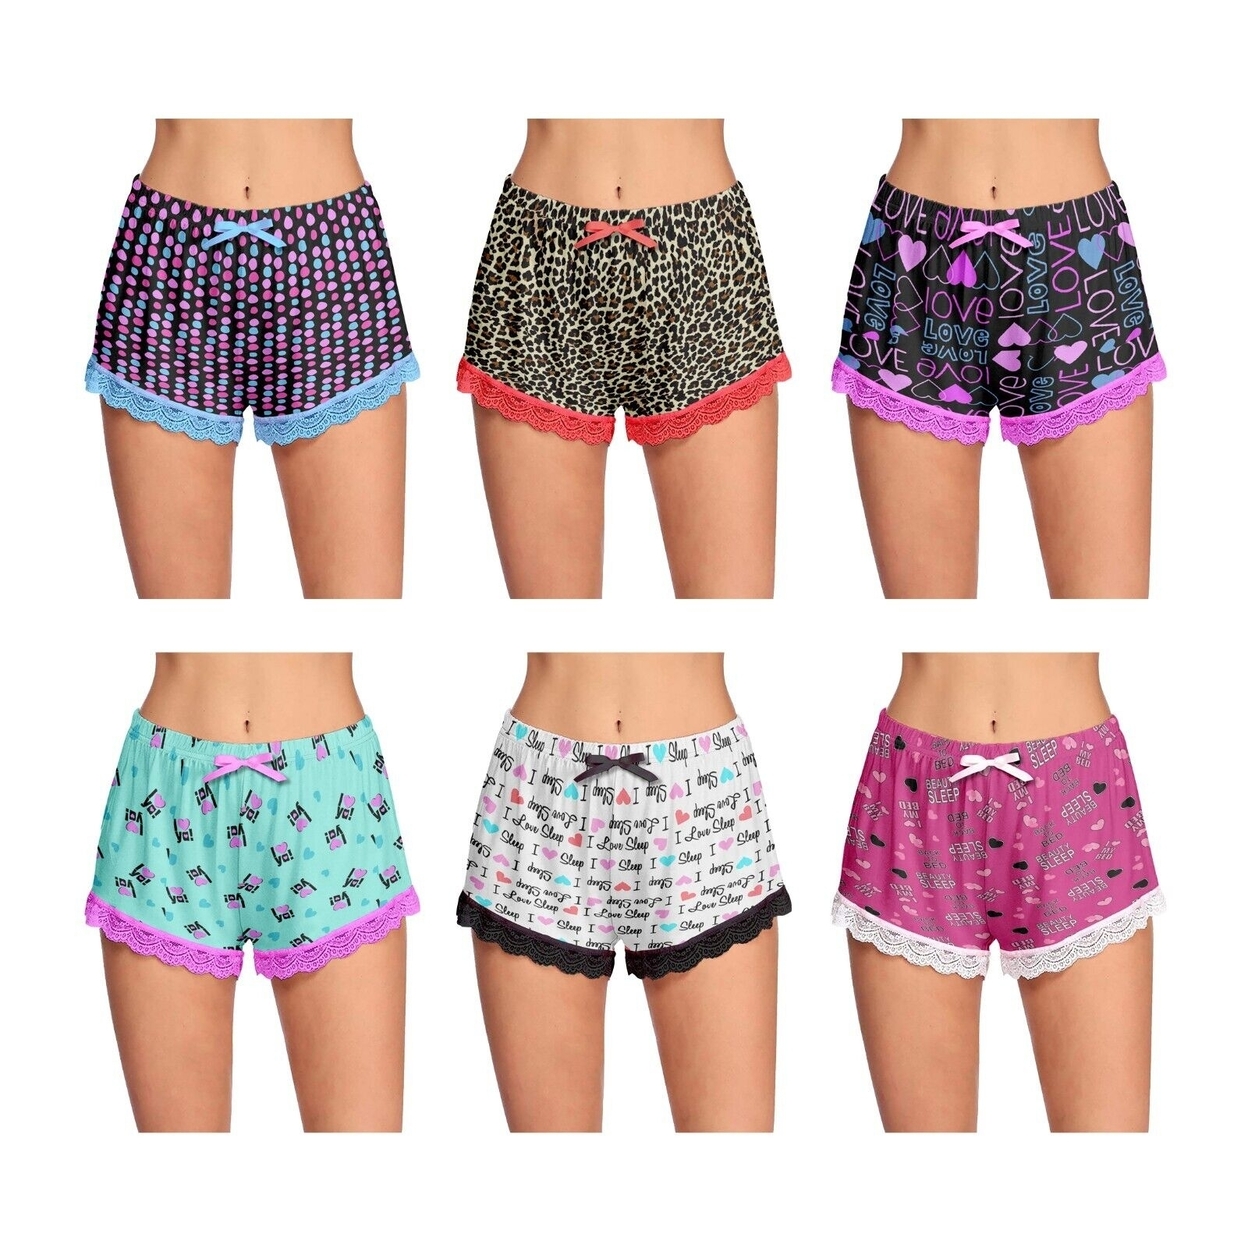 Women's Ultra Soft Cozy Fun Printed Lace Trim Pajama Lounge Shorts - Small, Shapes